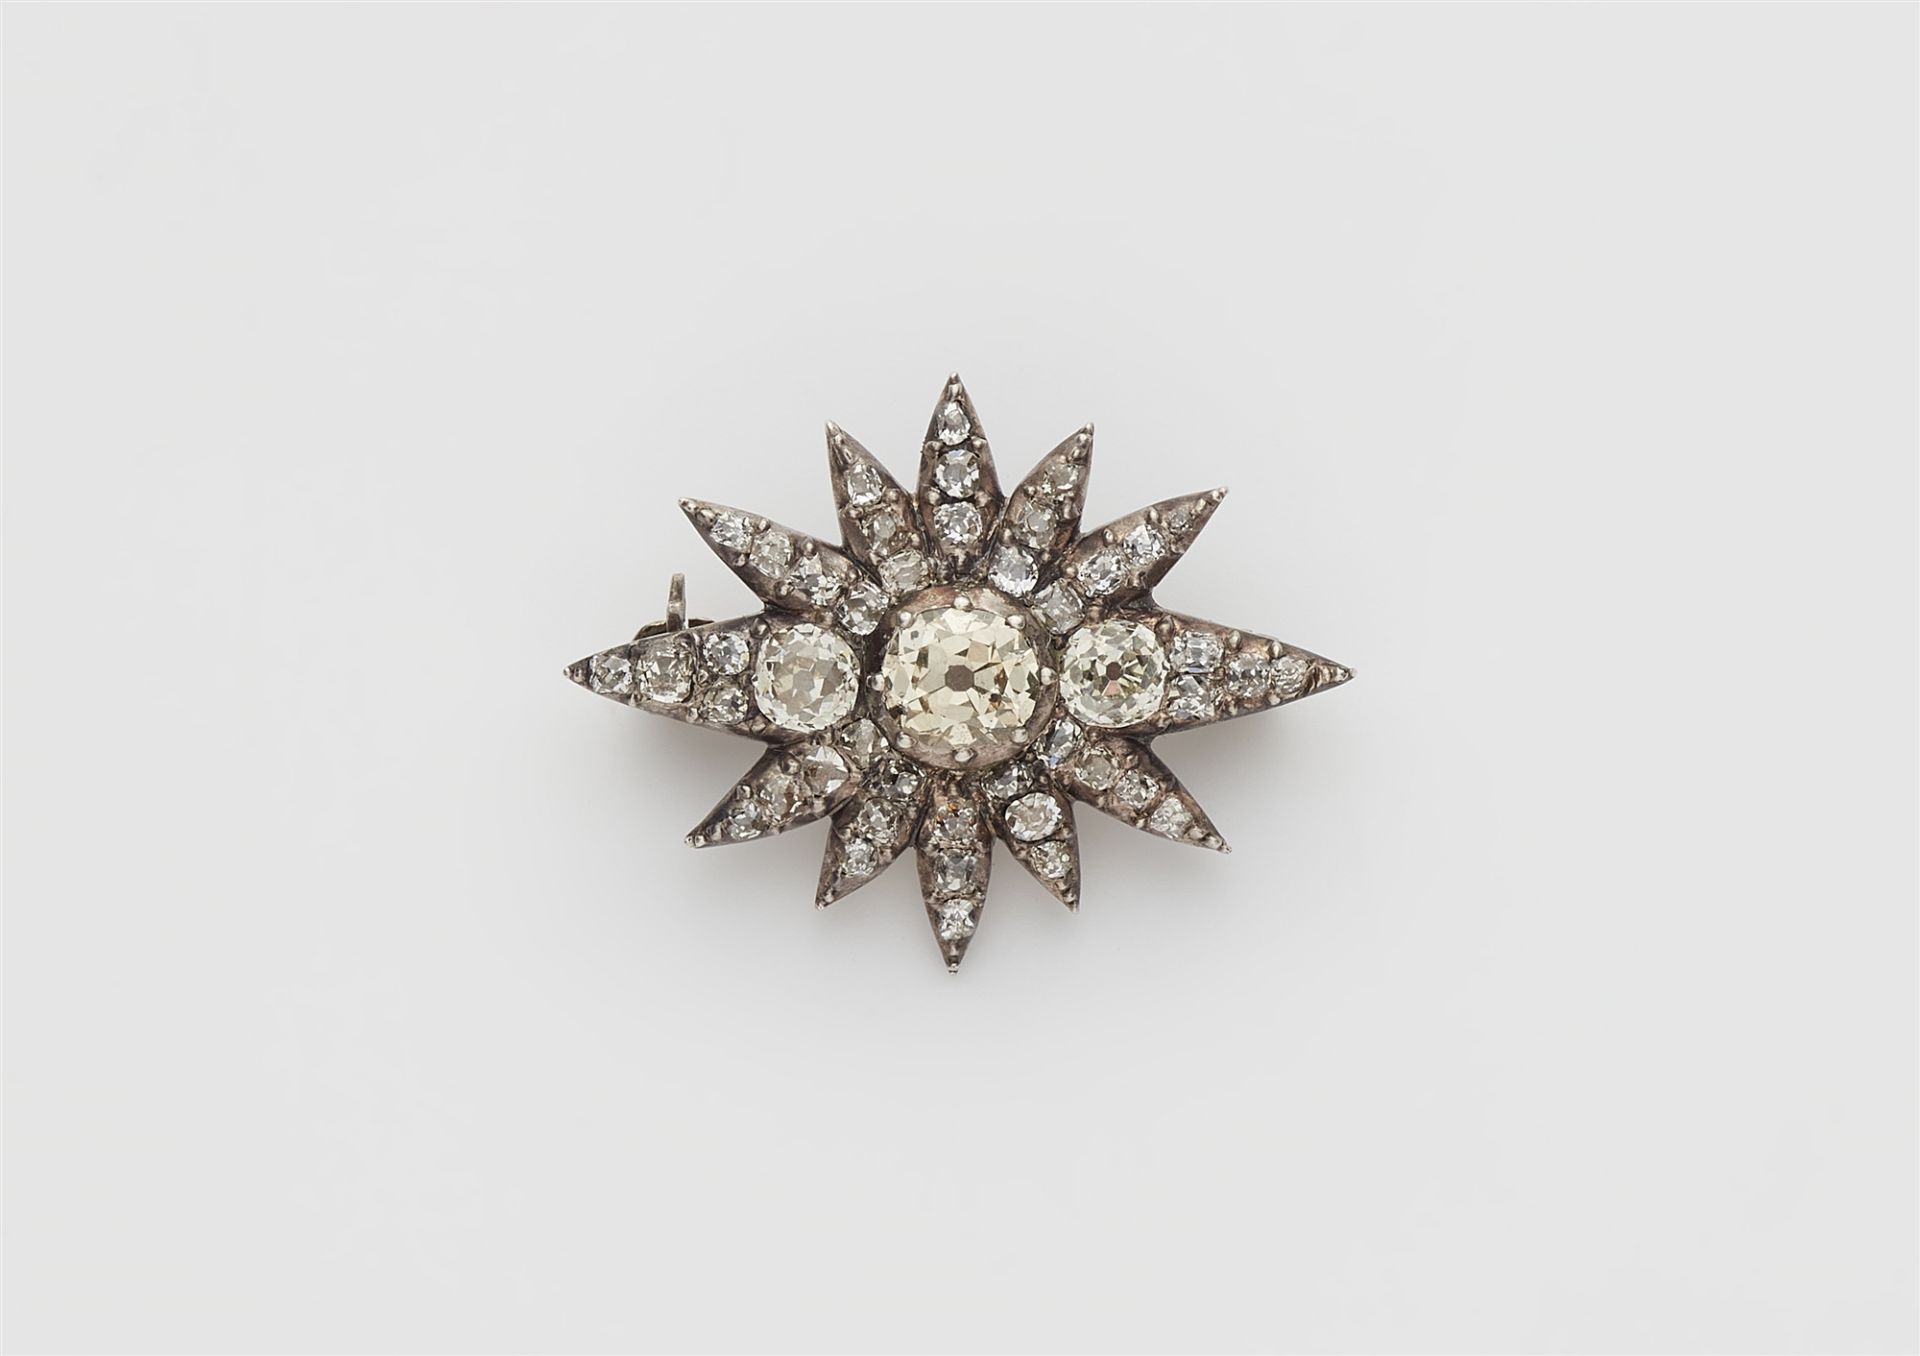 A small silver and cushion-cut diamond star brooch.